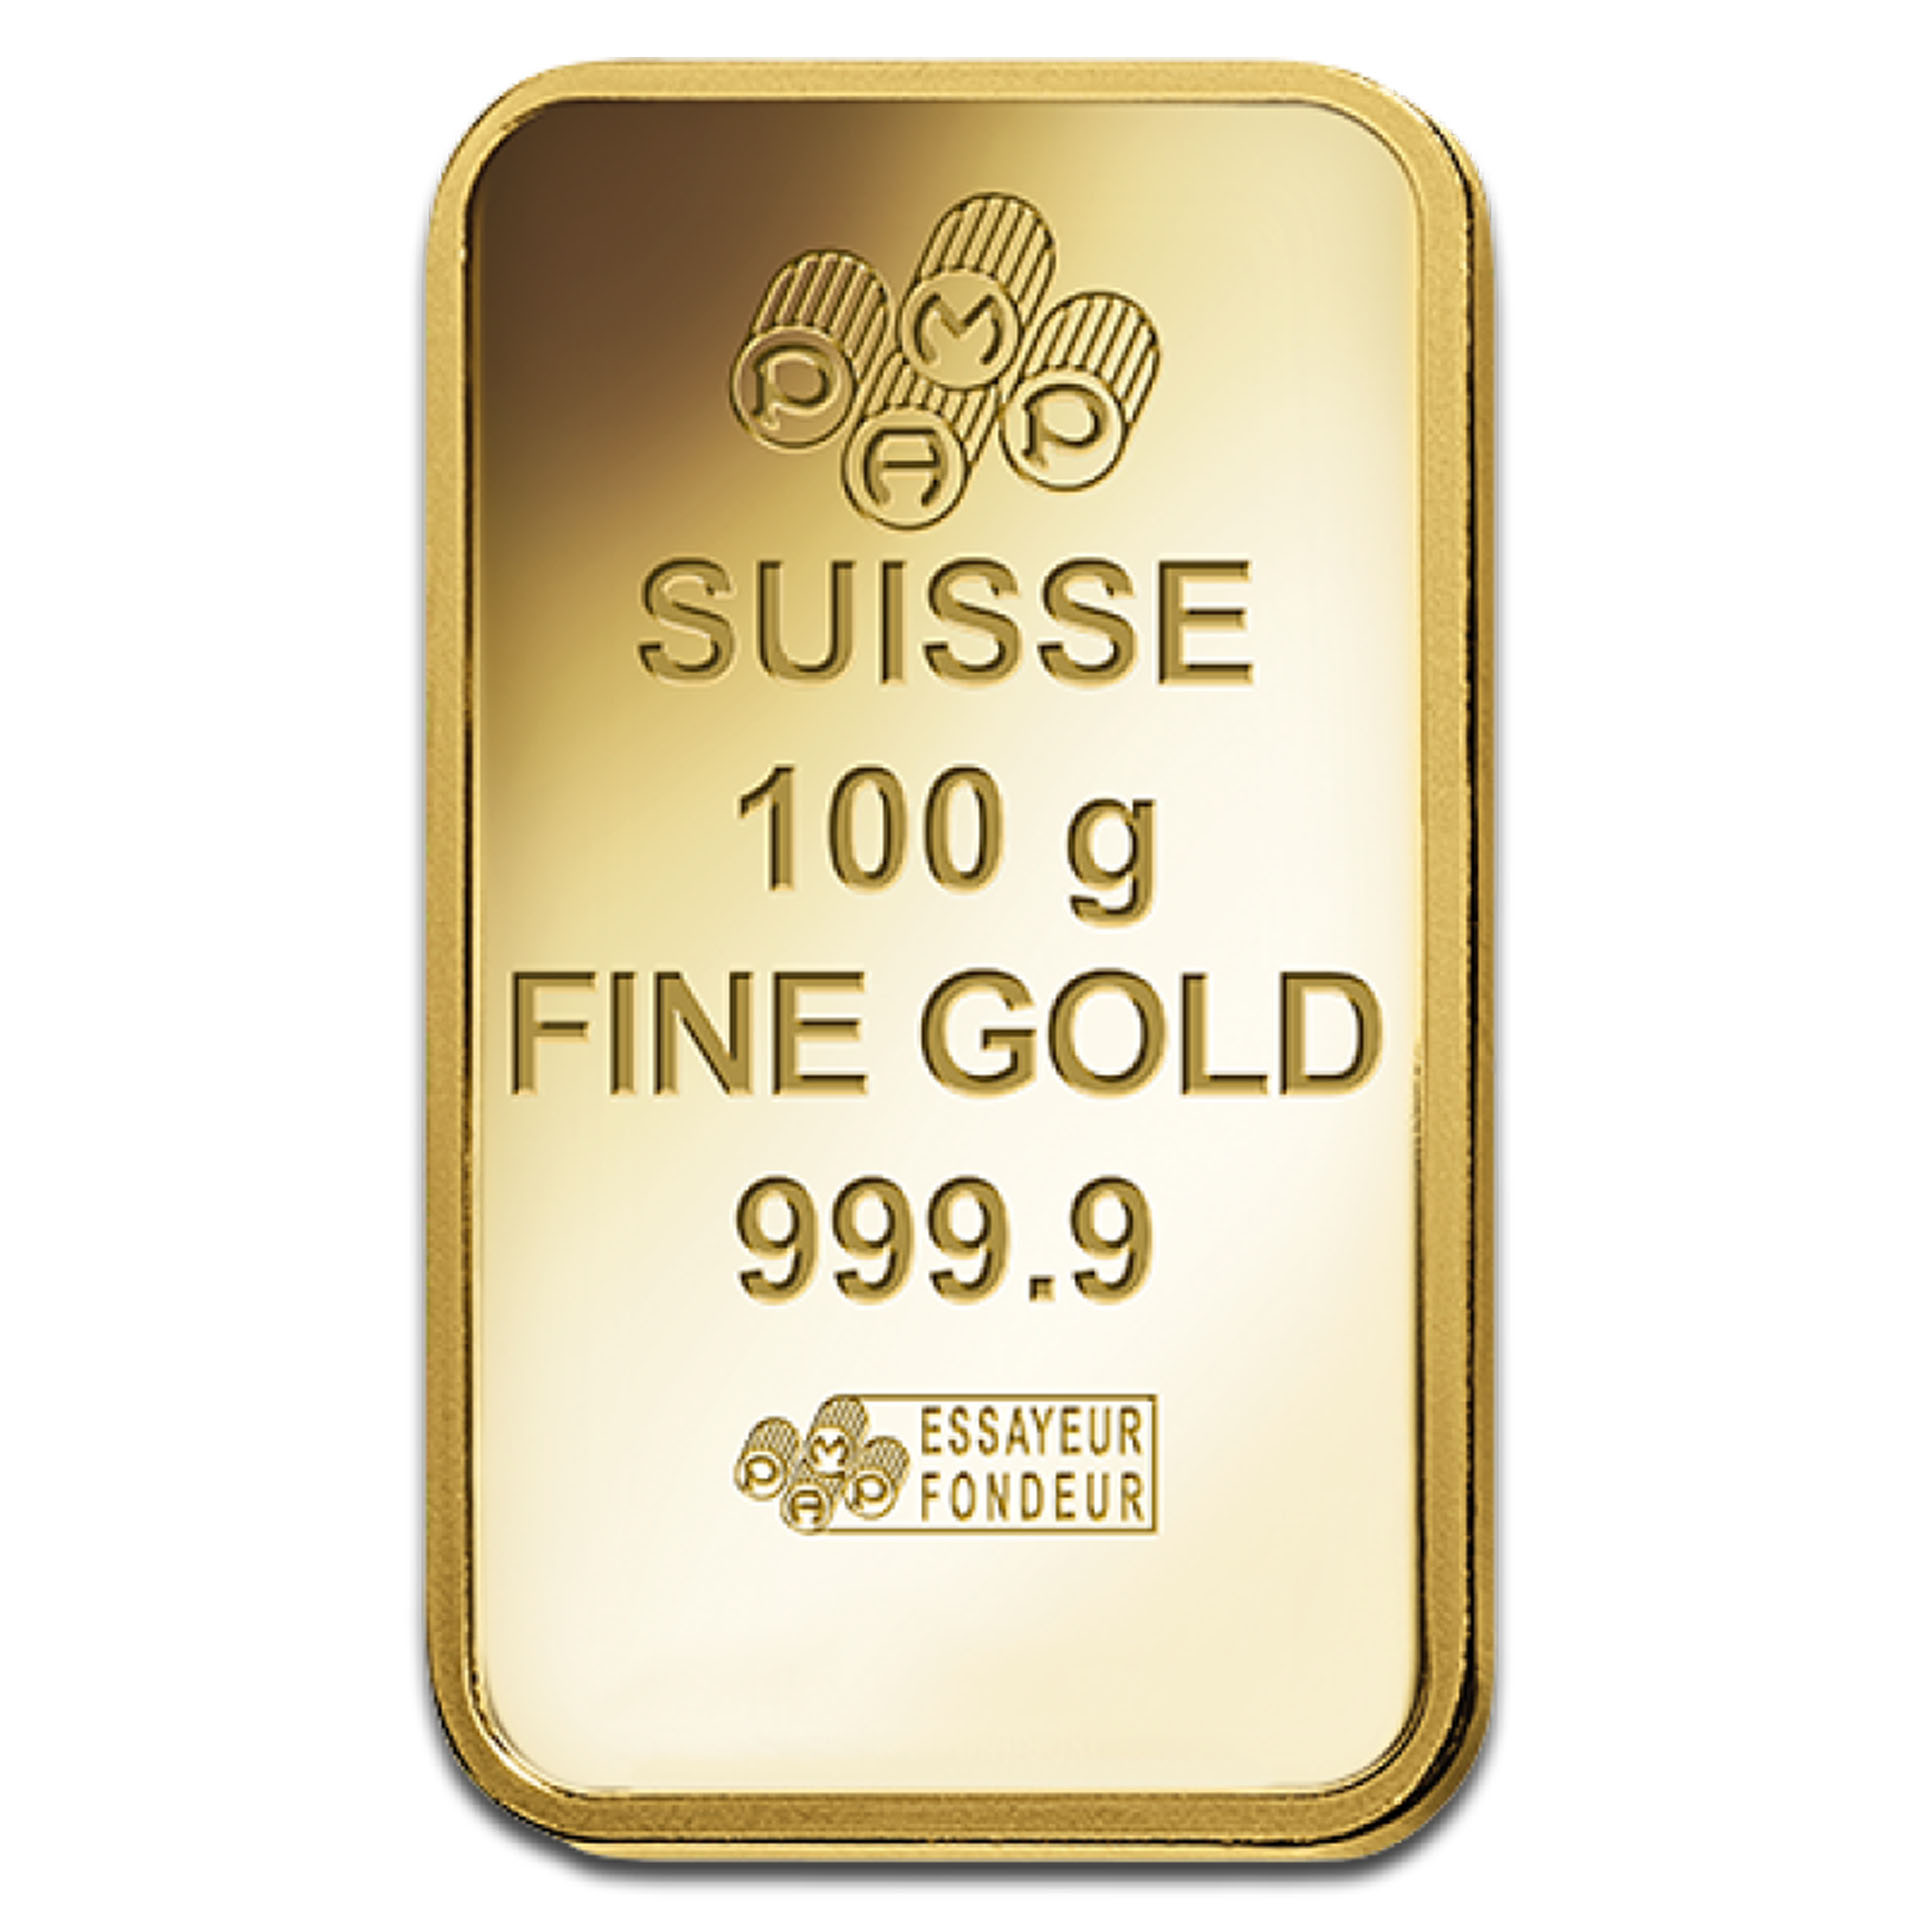 1 гр золота 999. Suisse 10g Fine Silver 999.9 белое золото. Suisse 10g Fine Gold 999.9 кулон. Слиток золота 999. 999.9 Fine Gold кулон серебро.